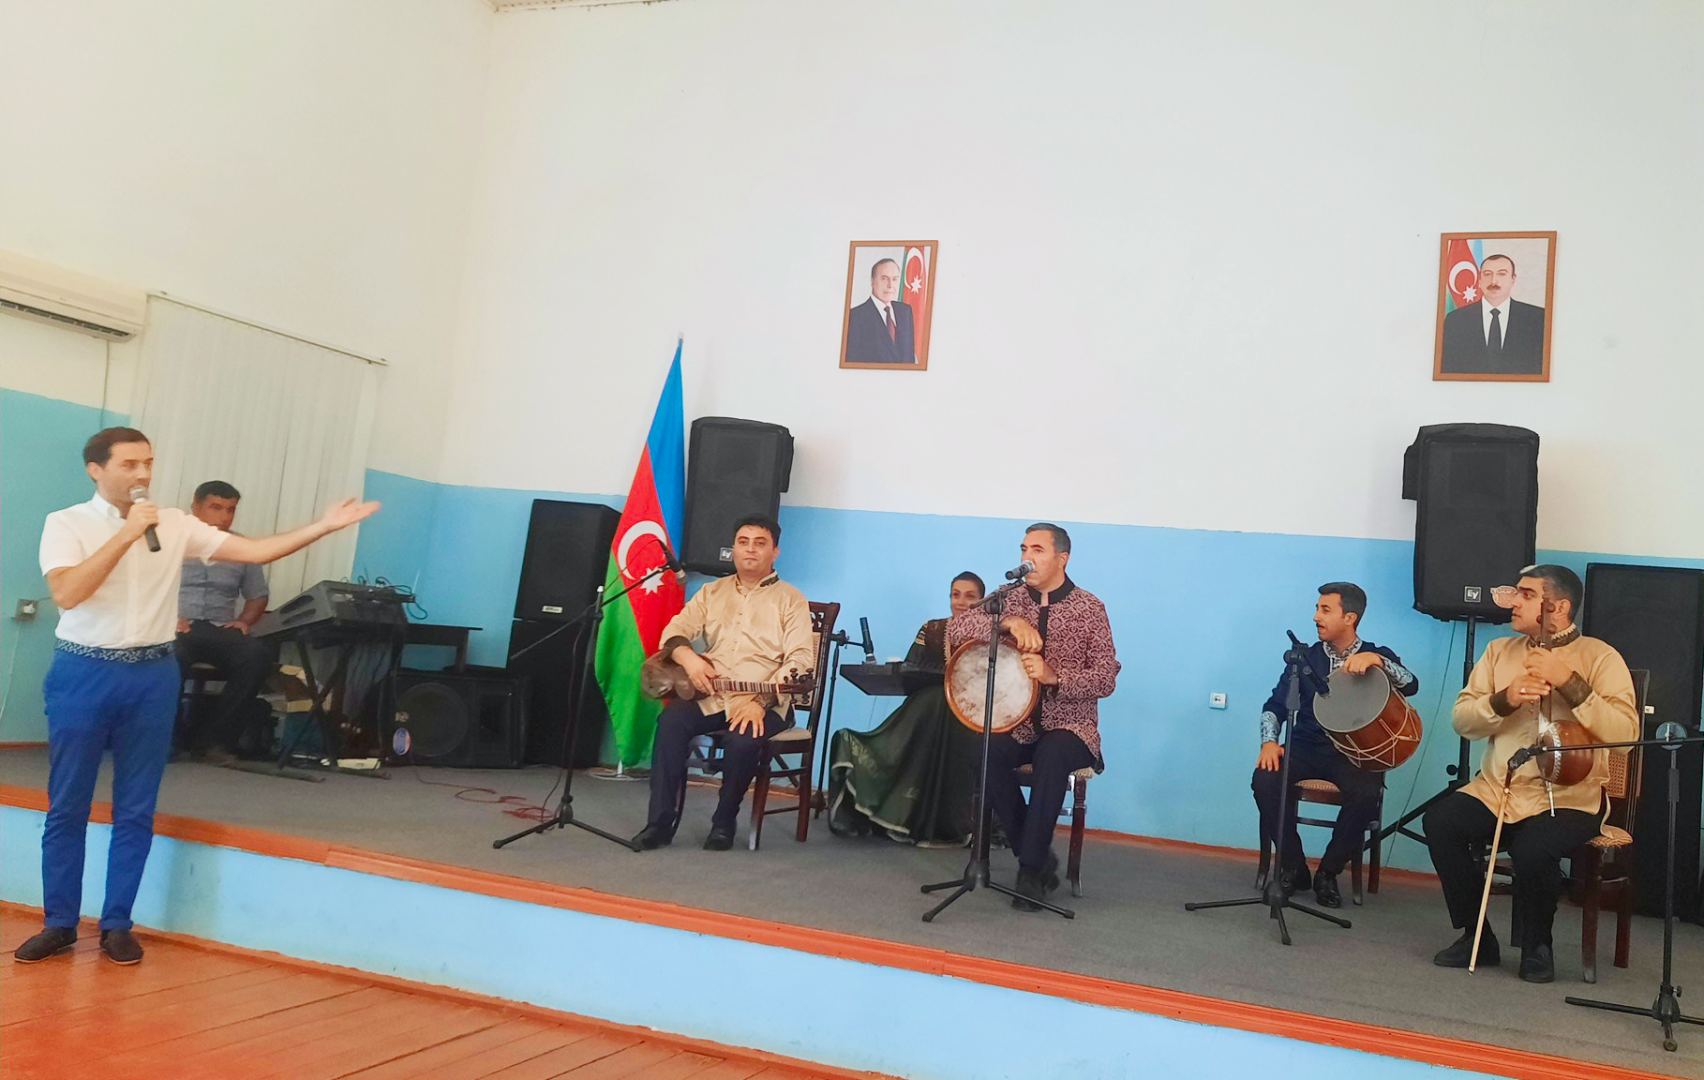 В Билясуваре состоялся концерт солистов Международного центра мугама (ФОТО)